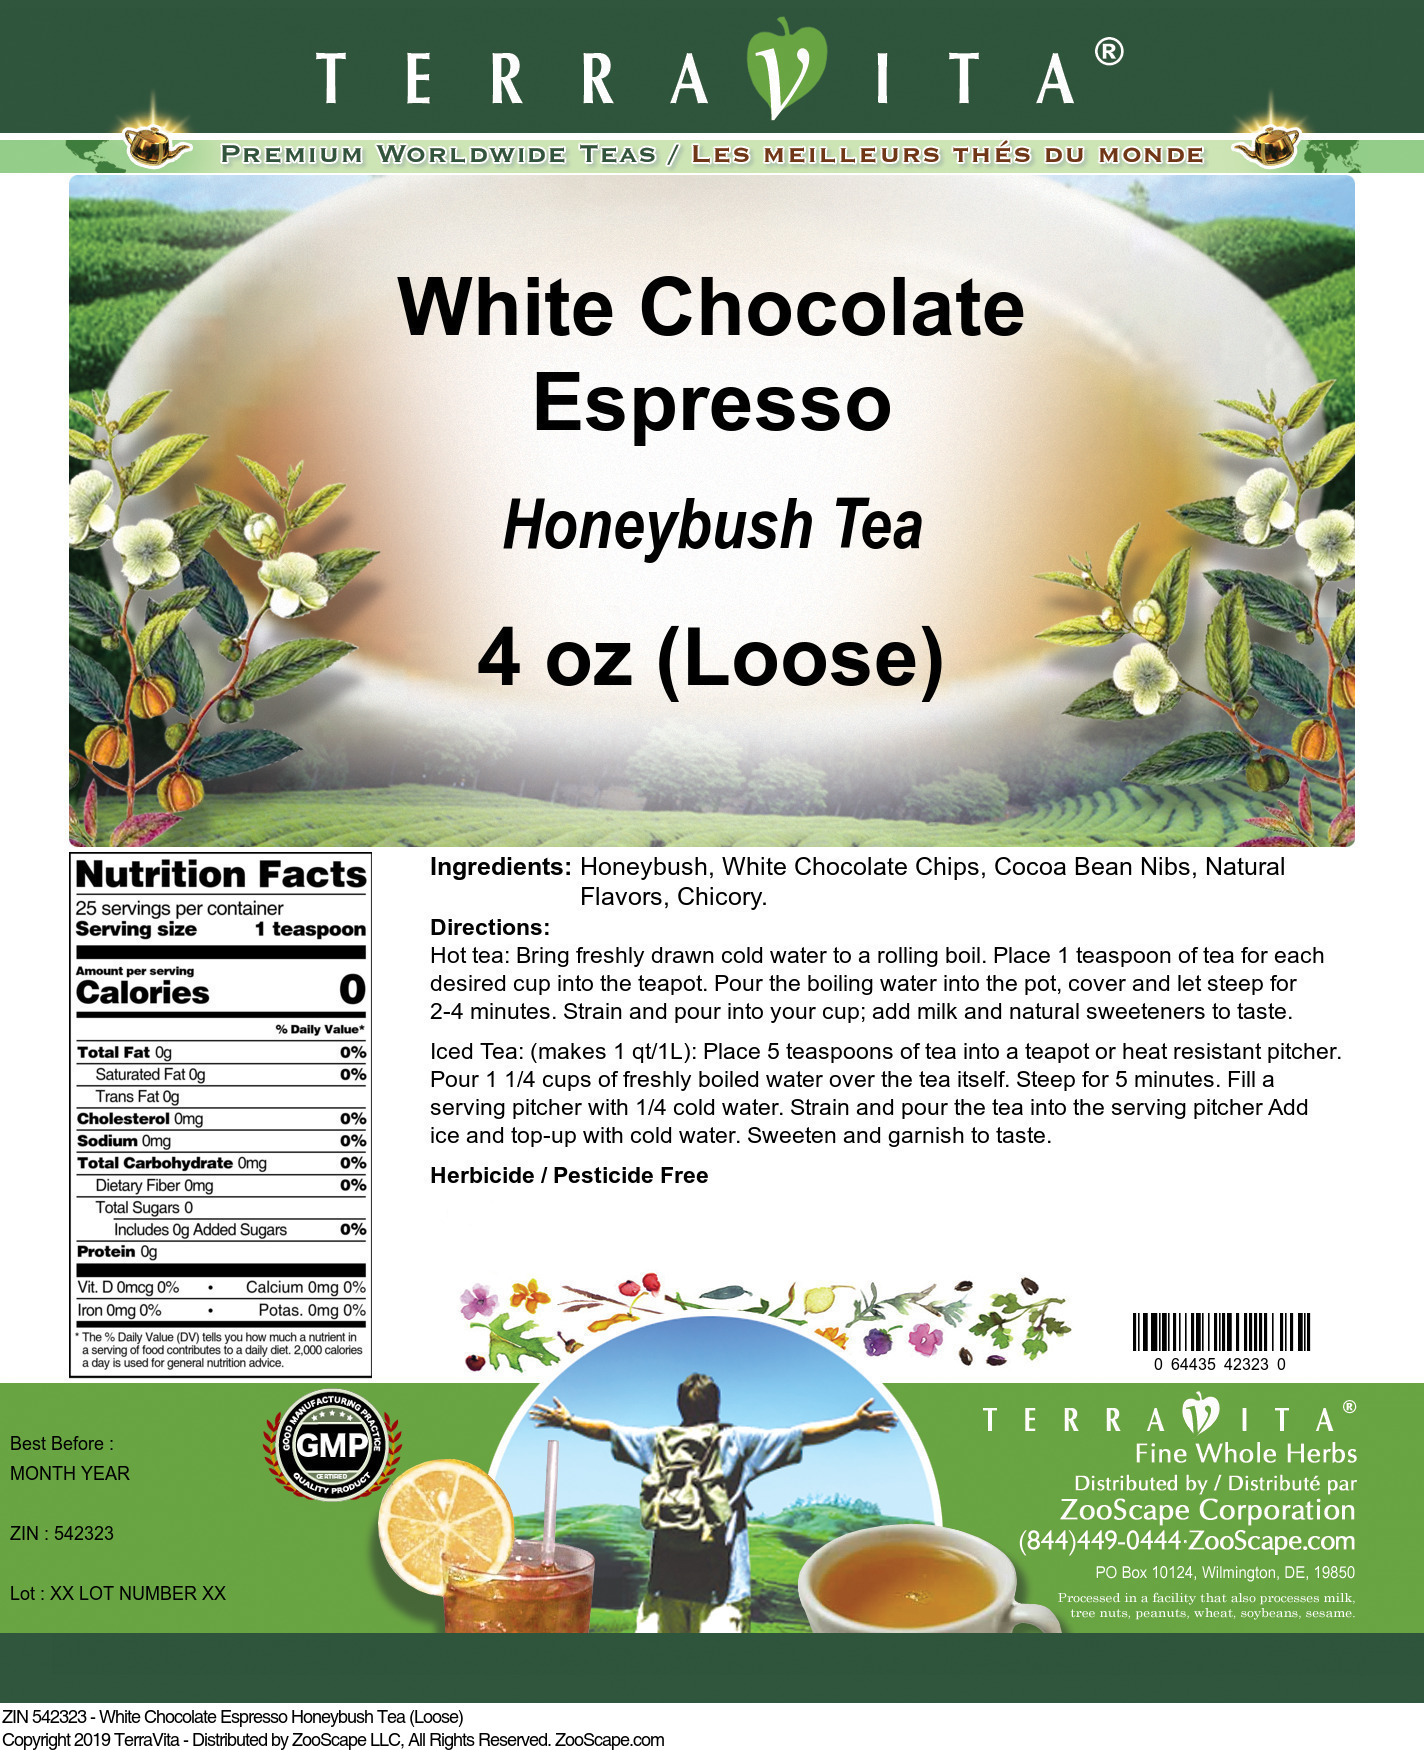 White Chocolate Espresso Honeybush Tea (Loose) - Label